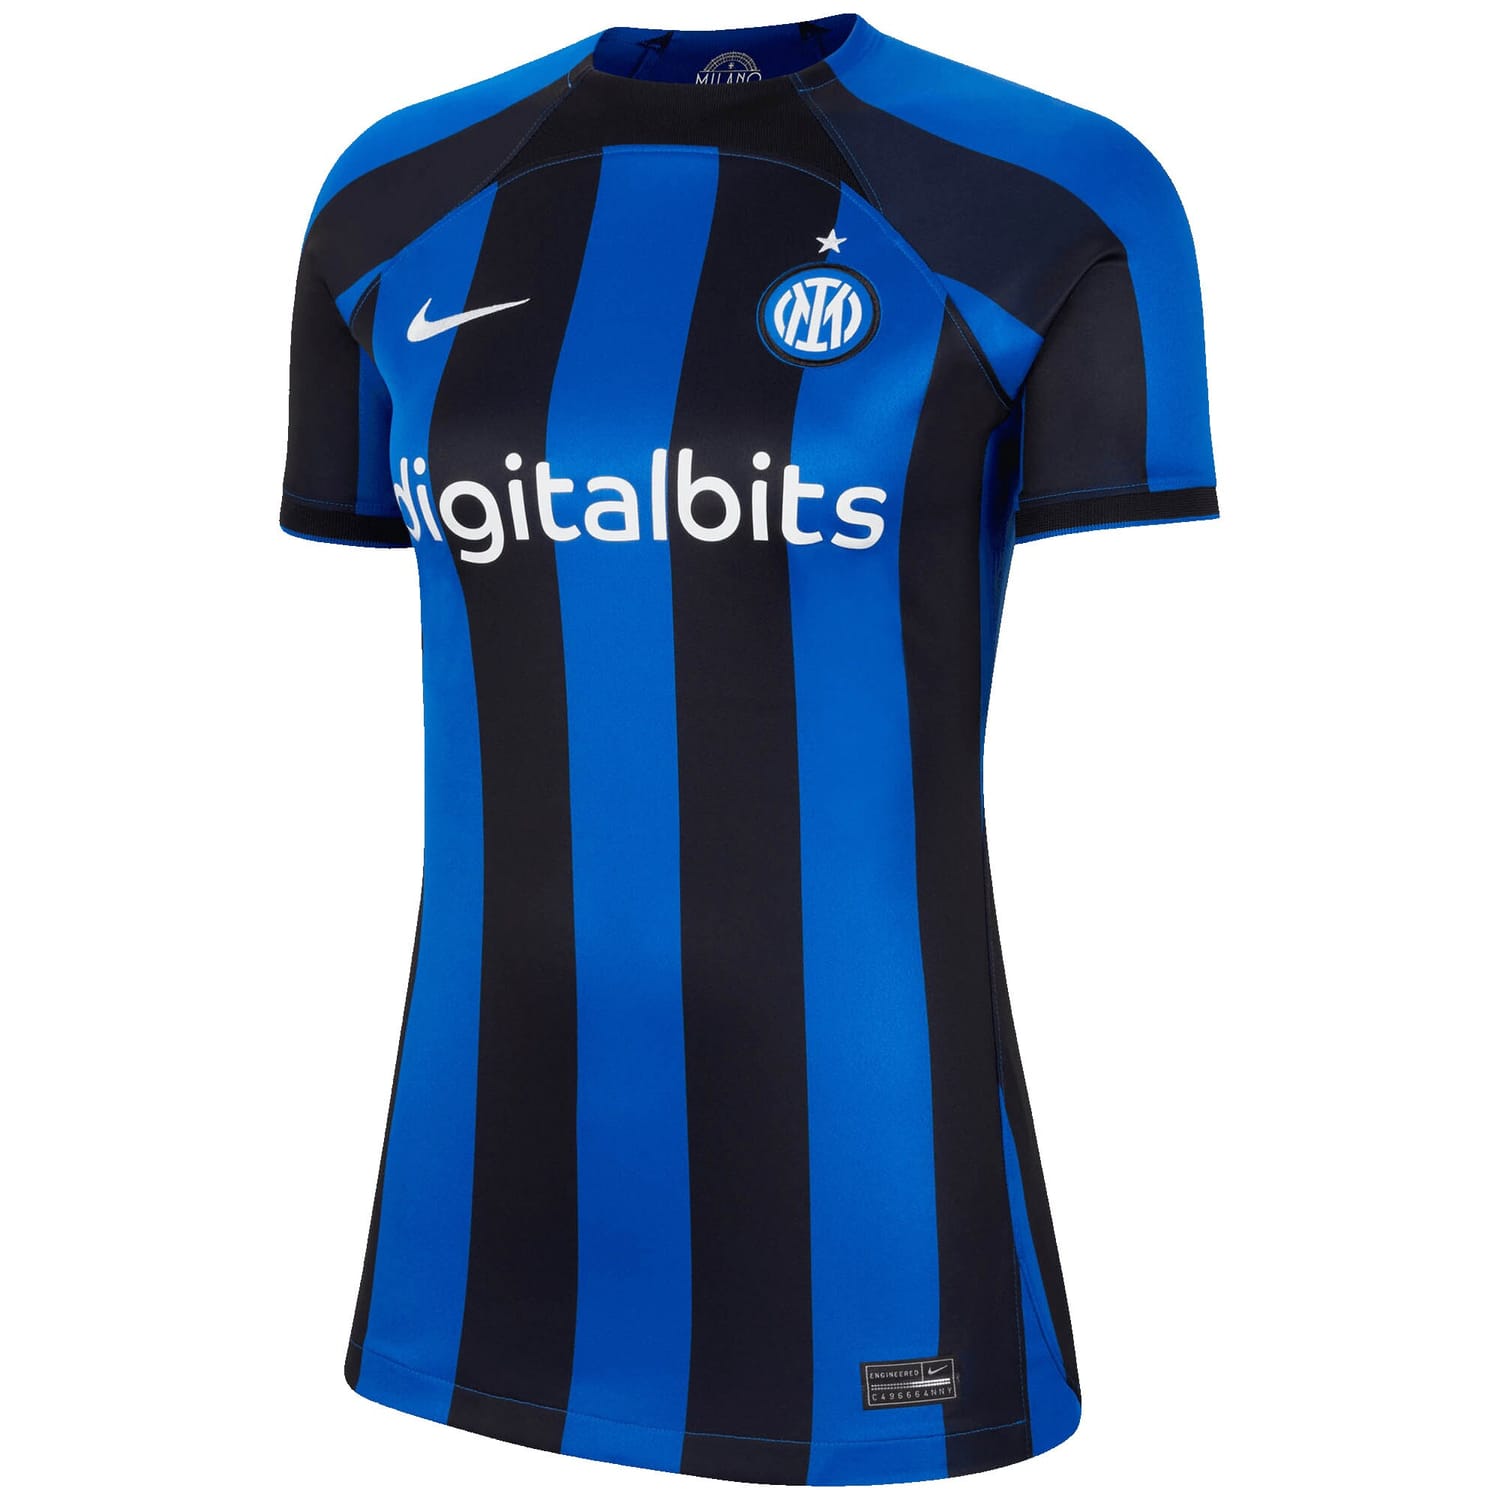 Serie A Inter Milan Home Jersey Shirt 2022-23 player Romelu Lukaku 90 printing for Women